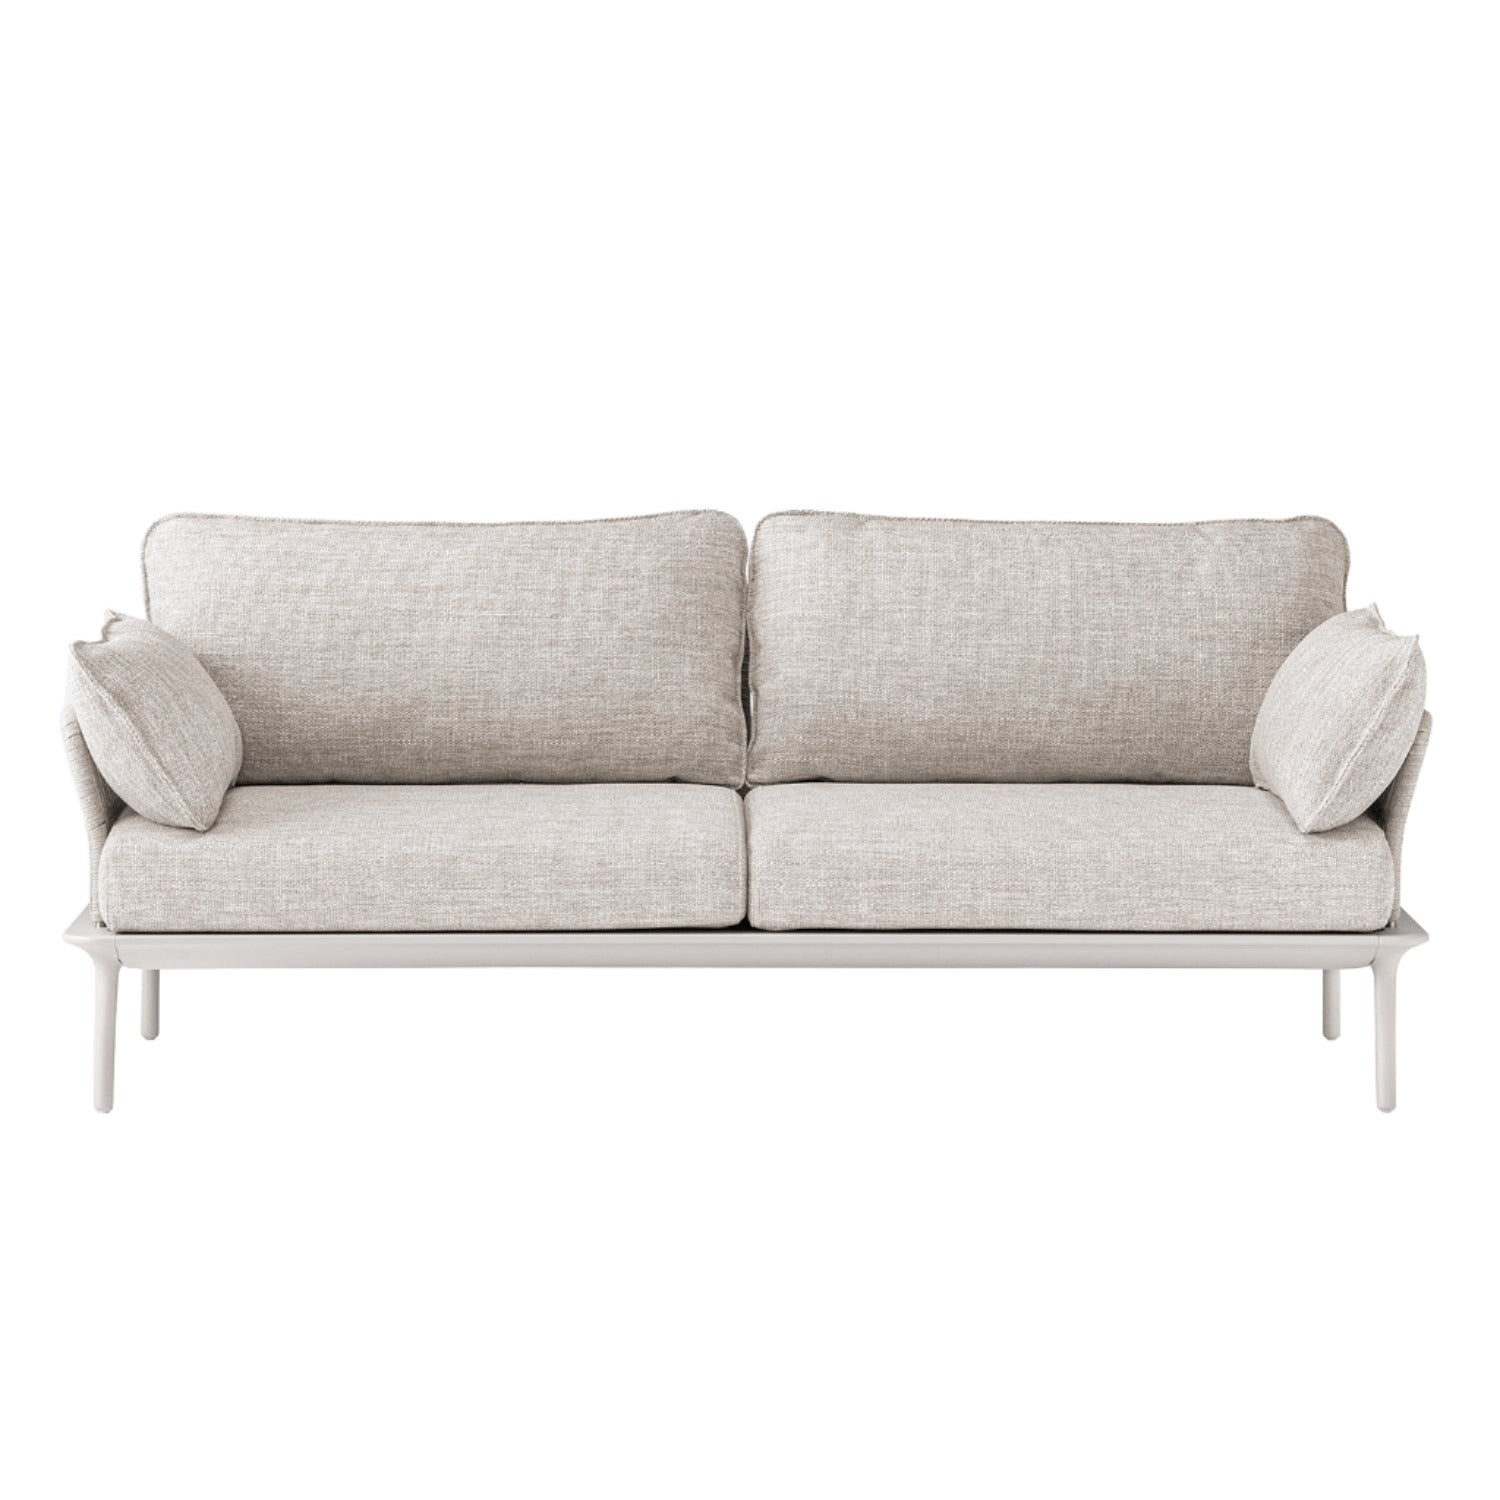 Pedrali Reva Twist sofa with beige cord